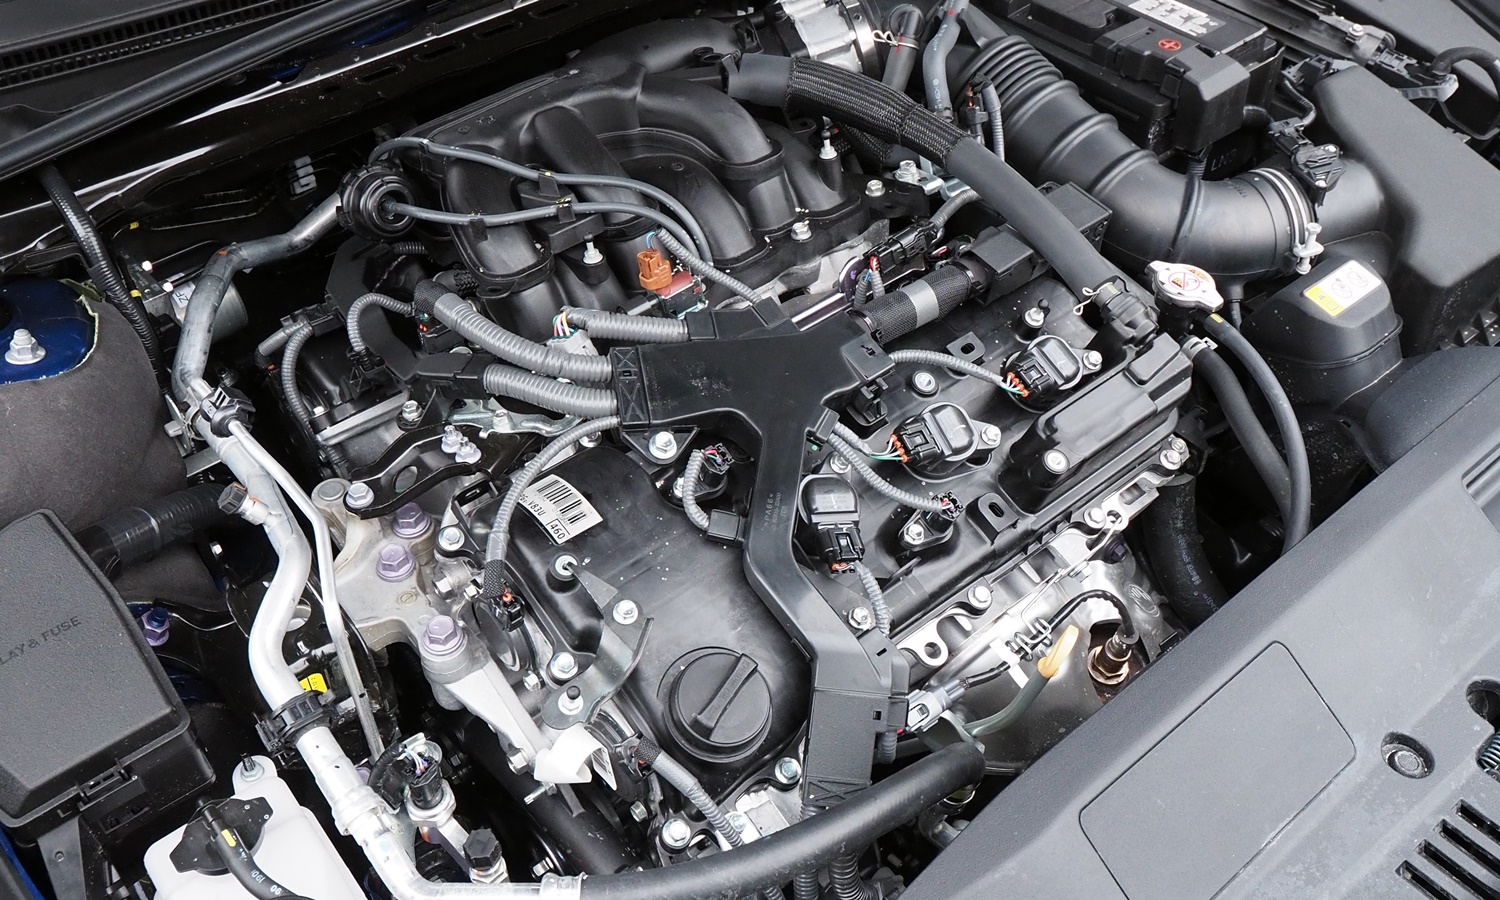 ES Reviews: Lexus ES 350 F Sport engine uncovered